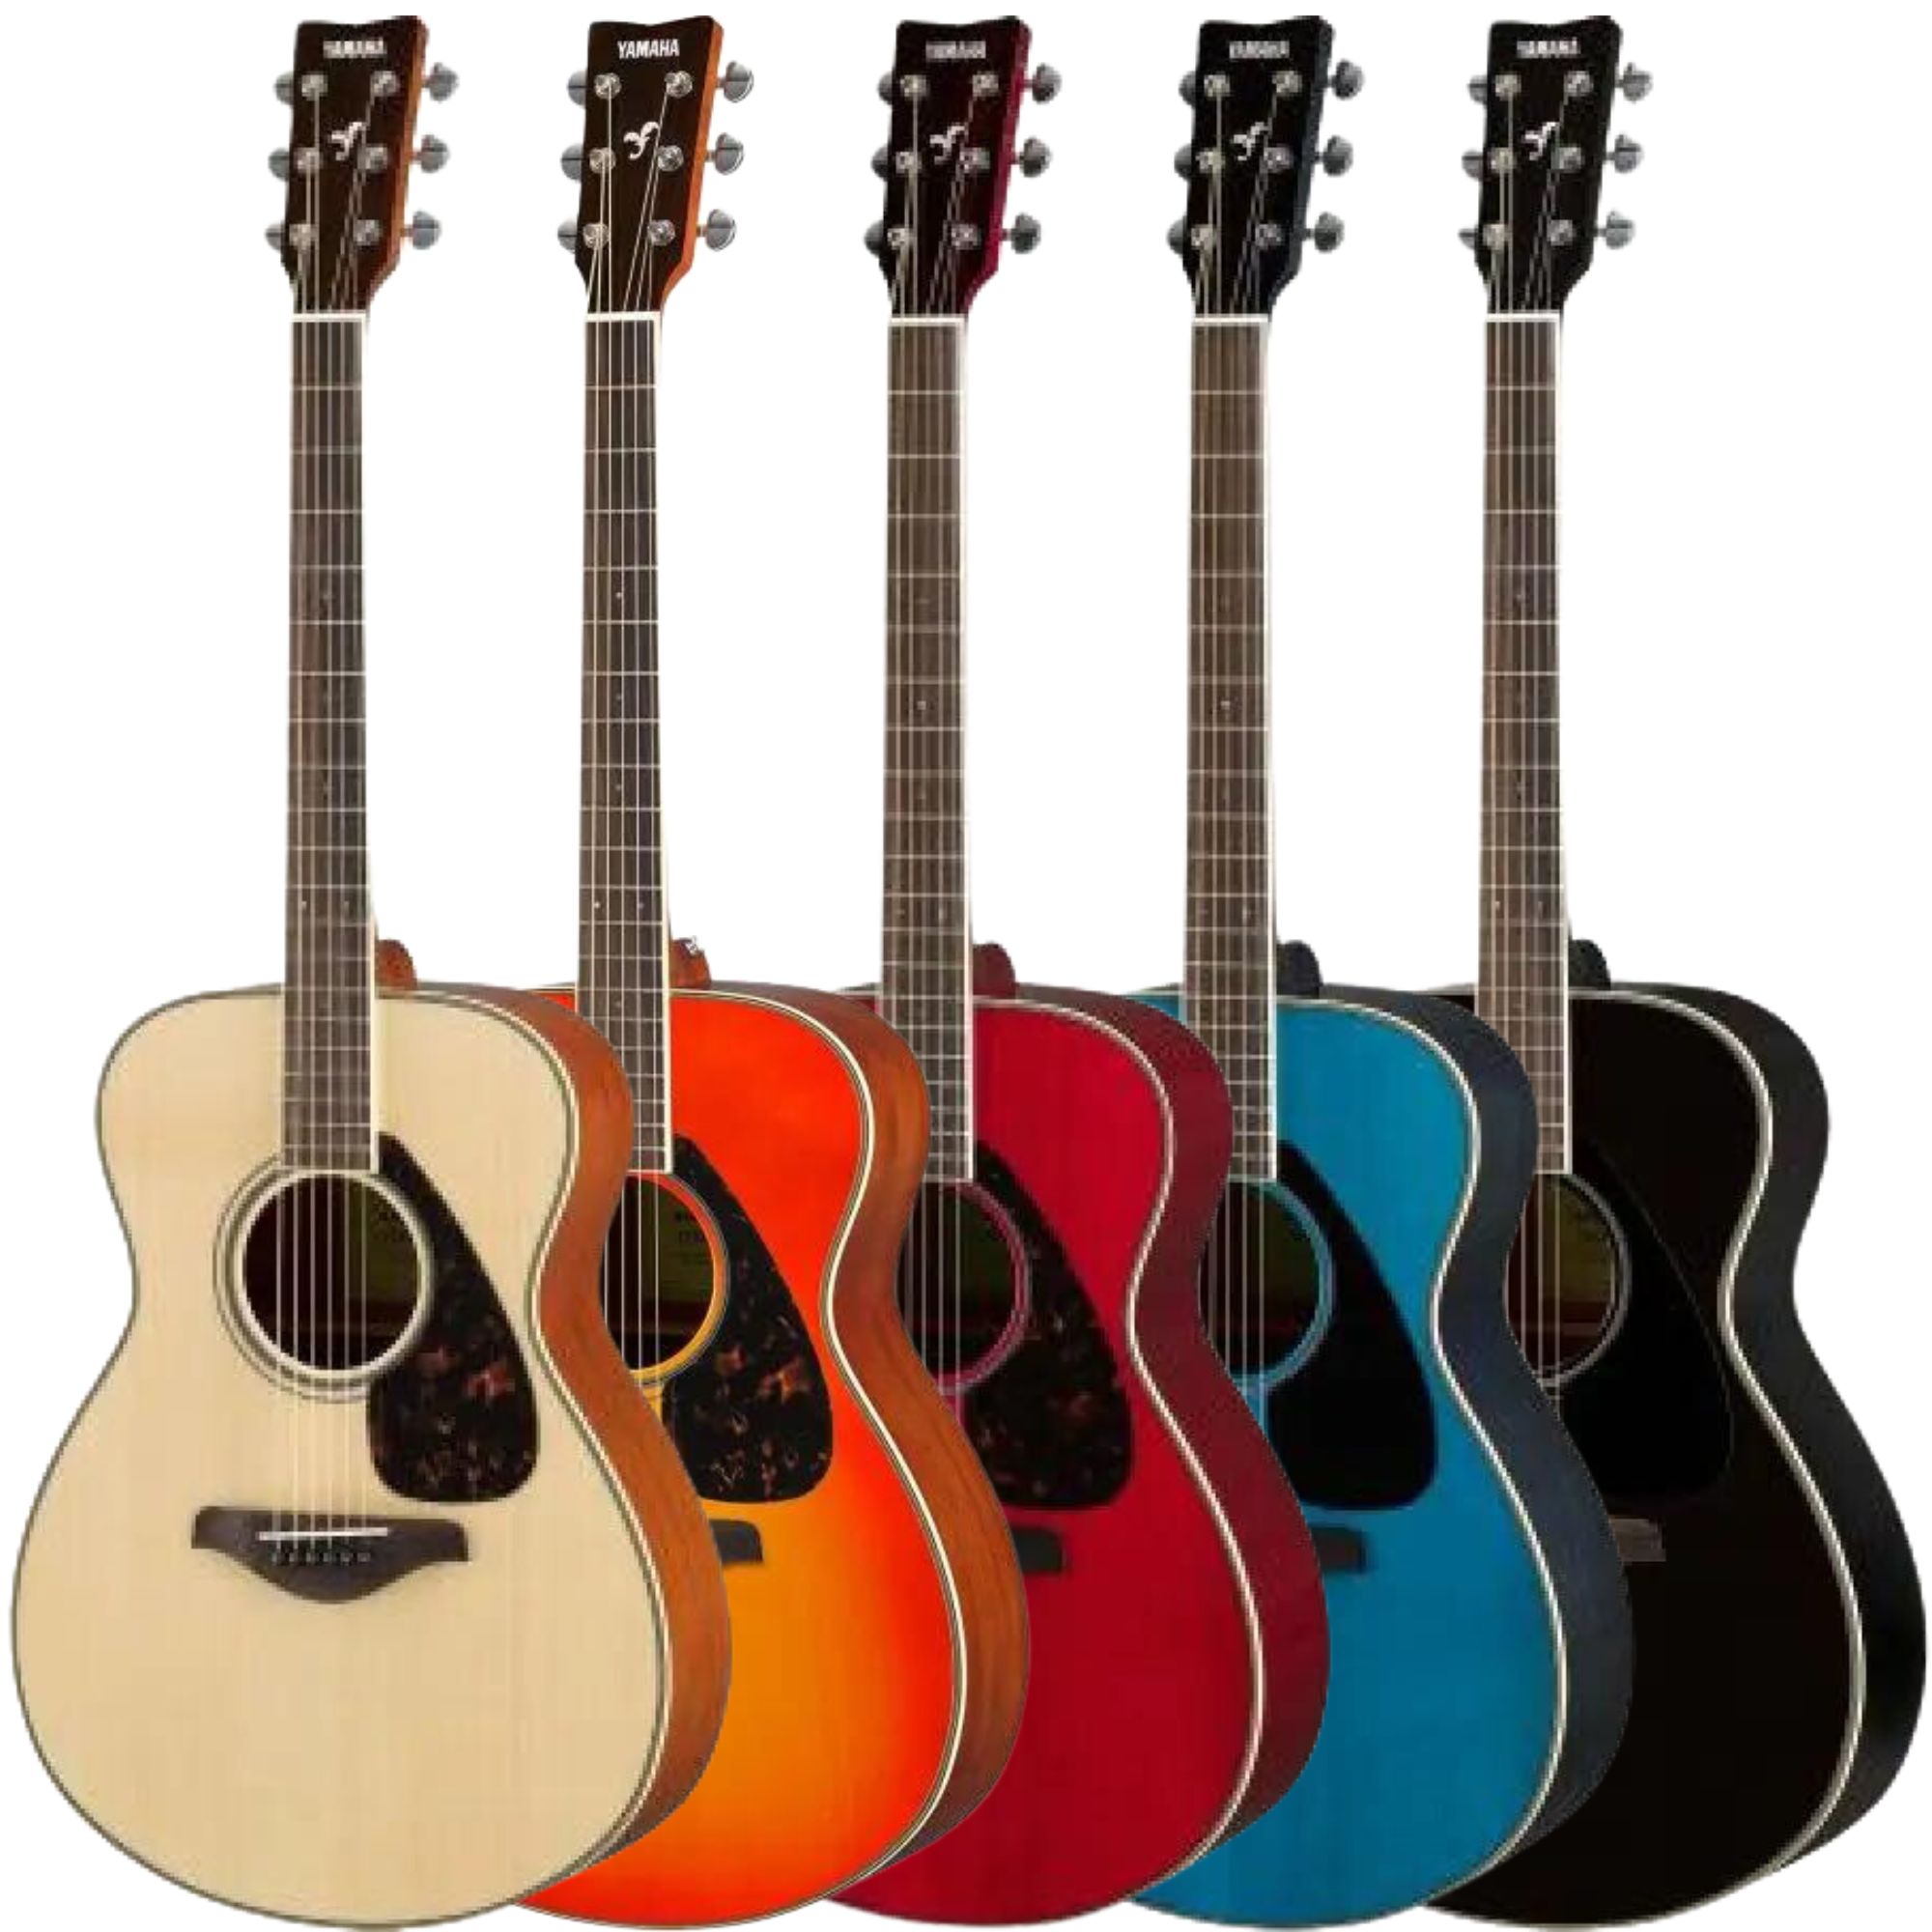 Yamaha FS820 MKII Acoustic Guitar